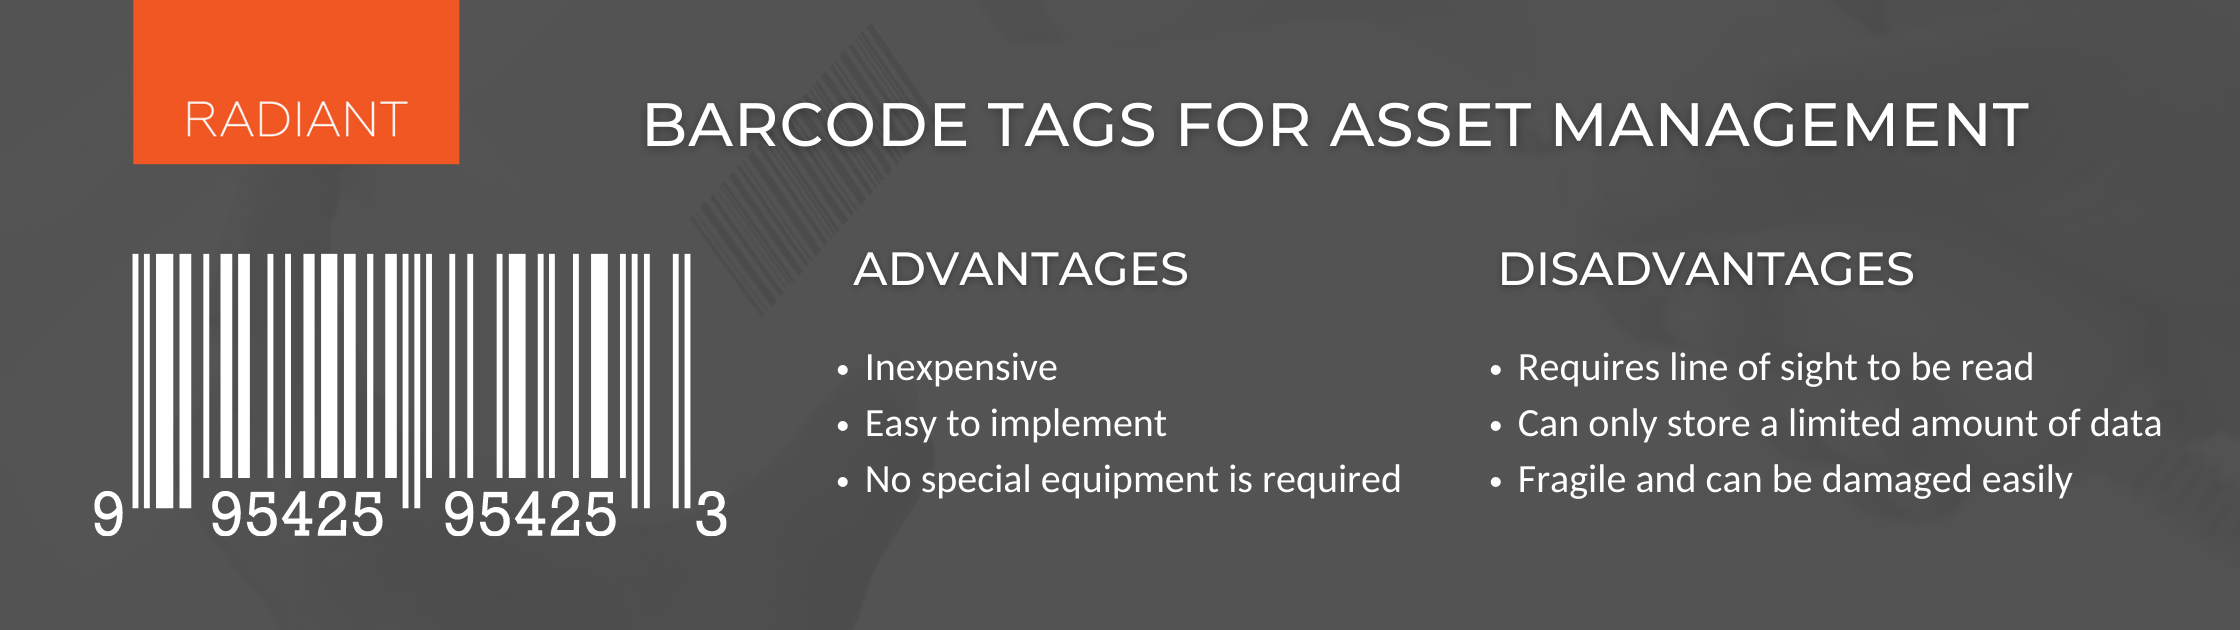 Asset Management Tags - Asset Management Tag Comparison - RFID vs Barcode Technology - RFID vs Bacode - Barcode Technology - Barcode Tags - Barcode Tags Advantages and Disadvantages - Barcode Labels